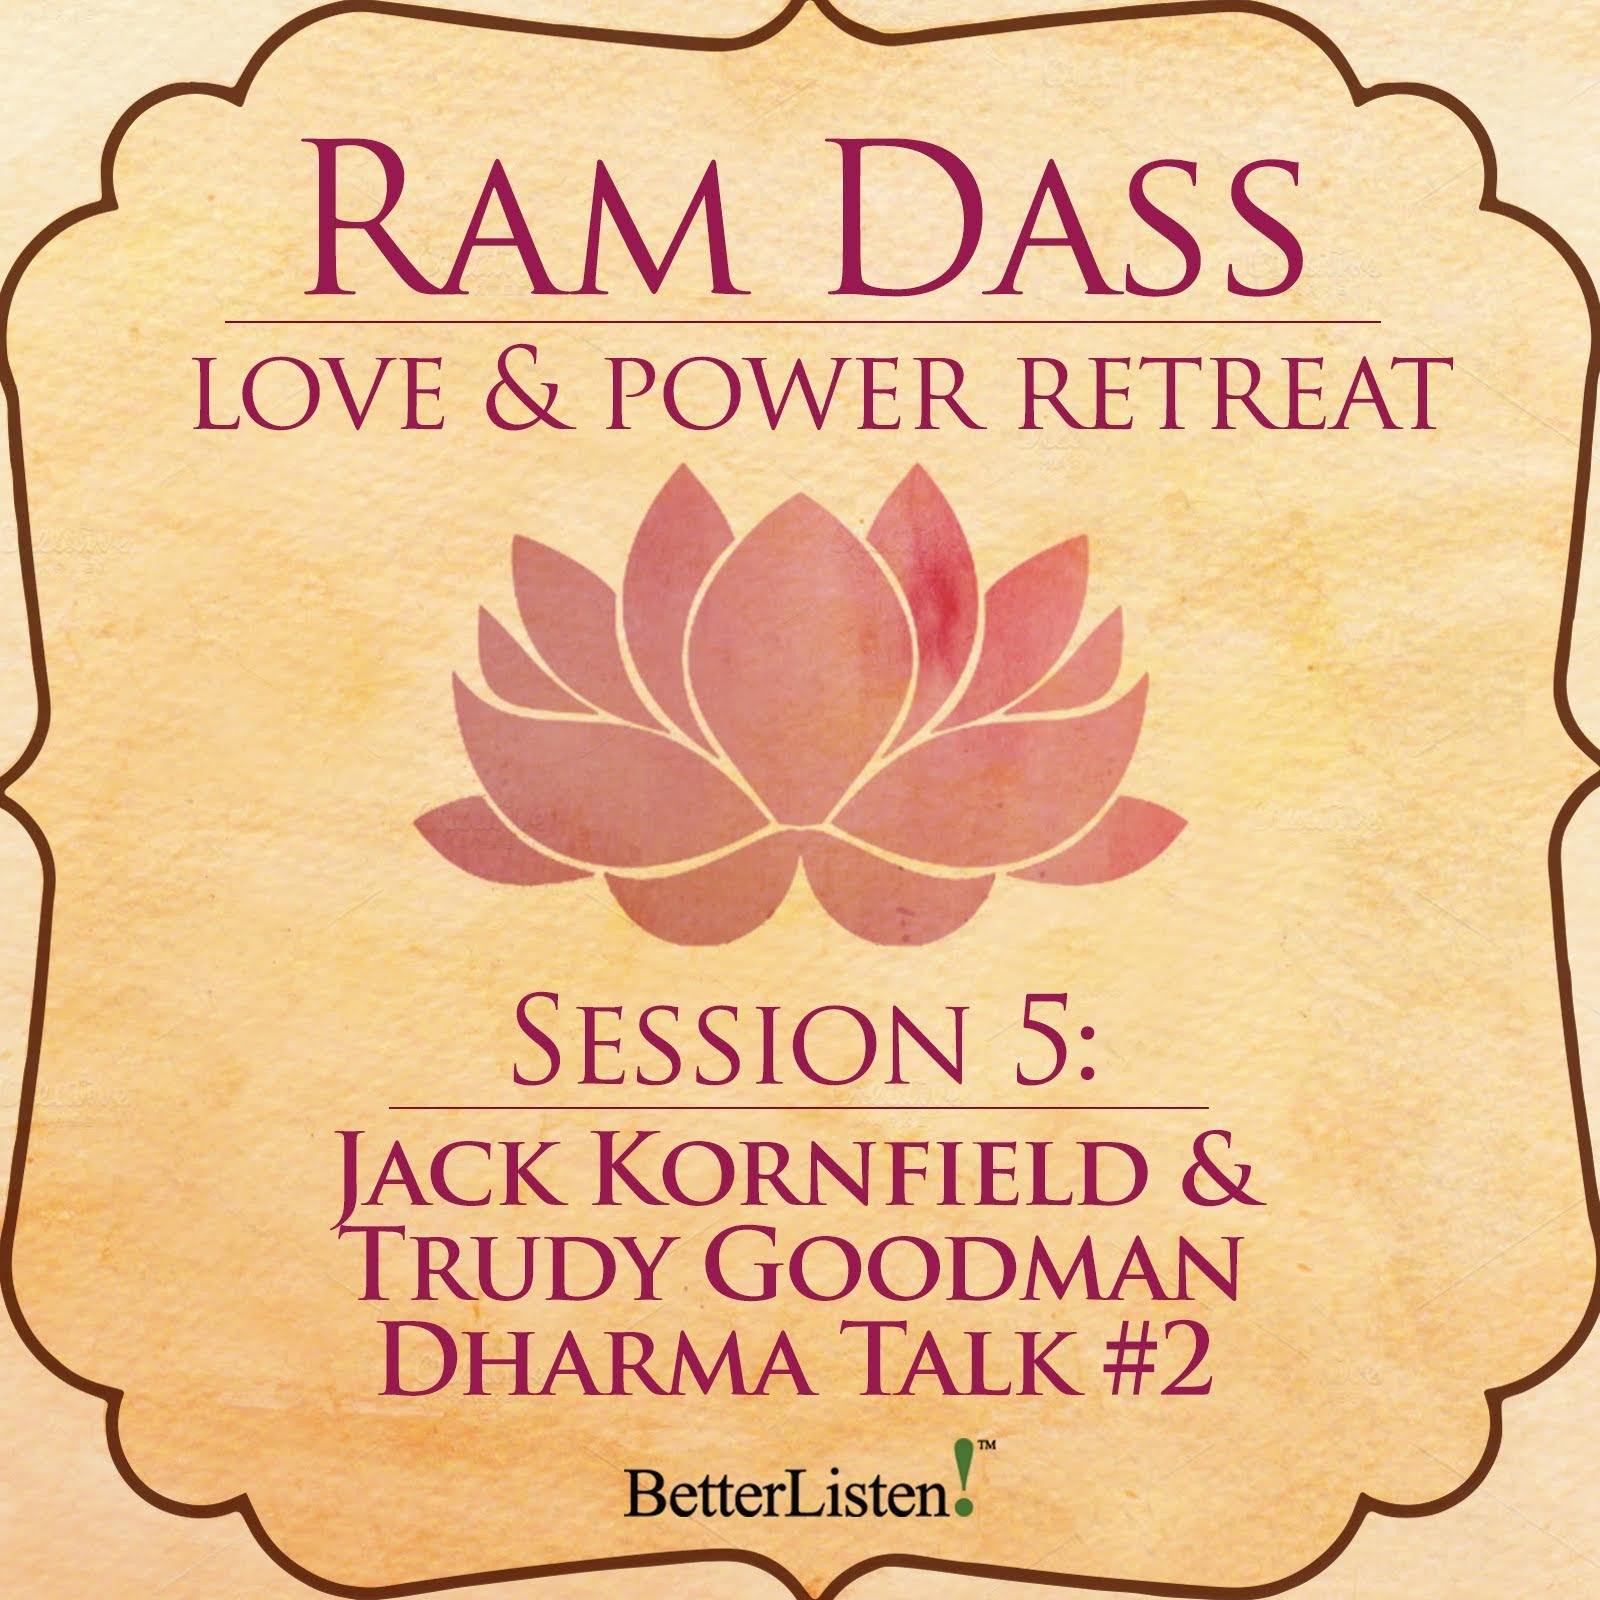 Jack Kornfield and Trudy Goodman Dharma Talk #2 from the Love and Power Retreat Audio Program Ram Dass LSR - BetterListen!